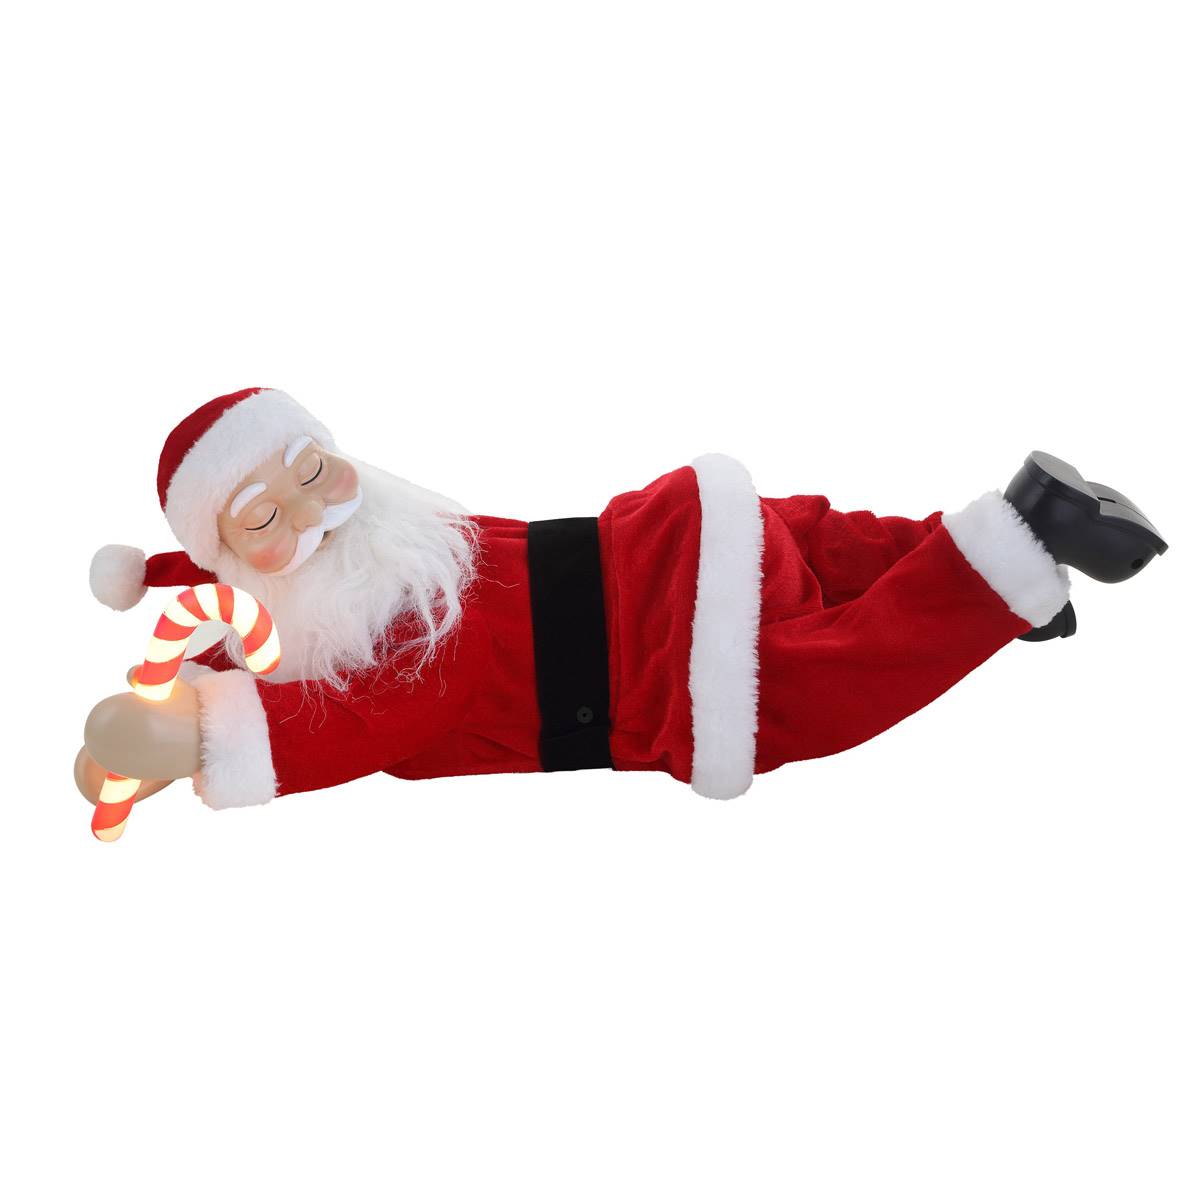 Mr. Christmas Sleeping Santa